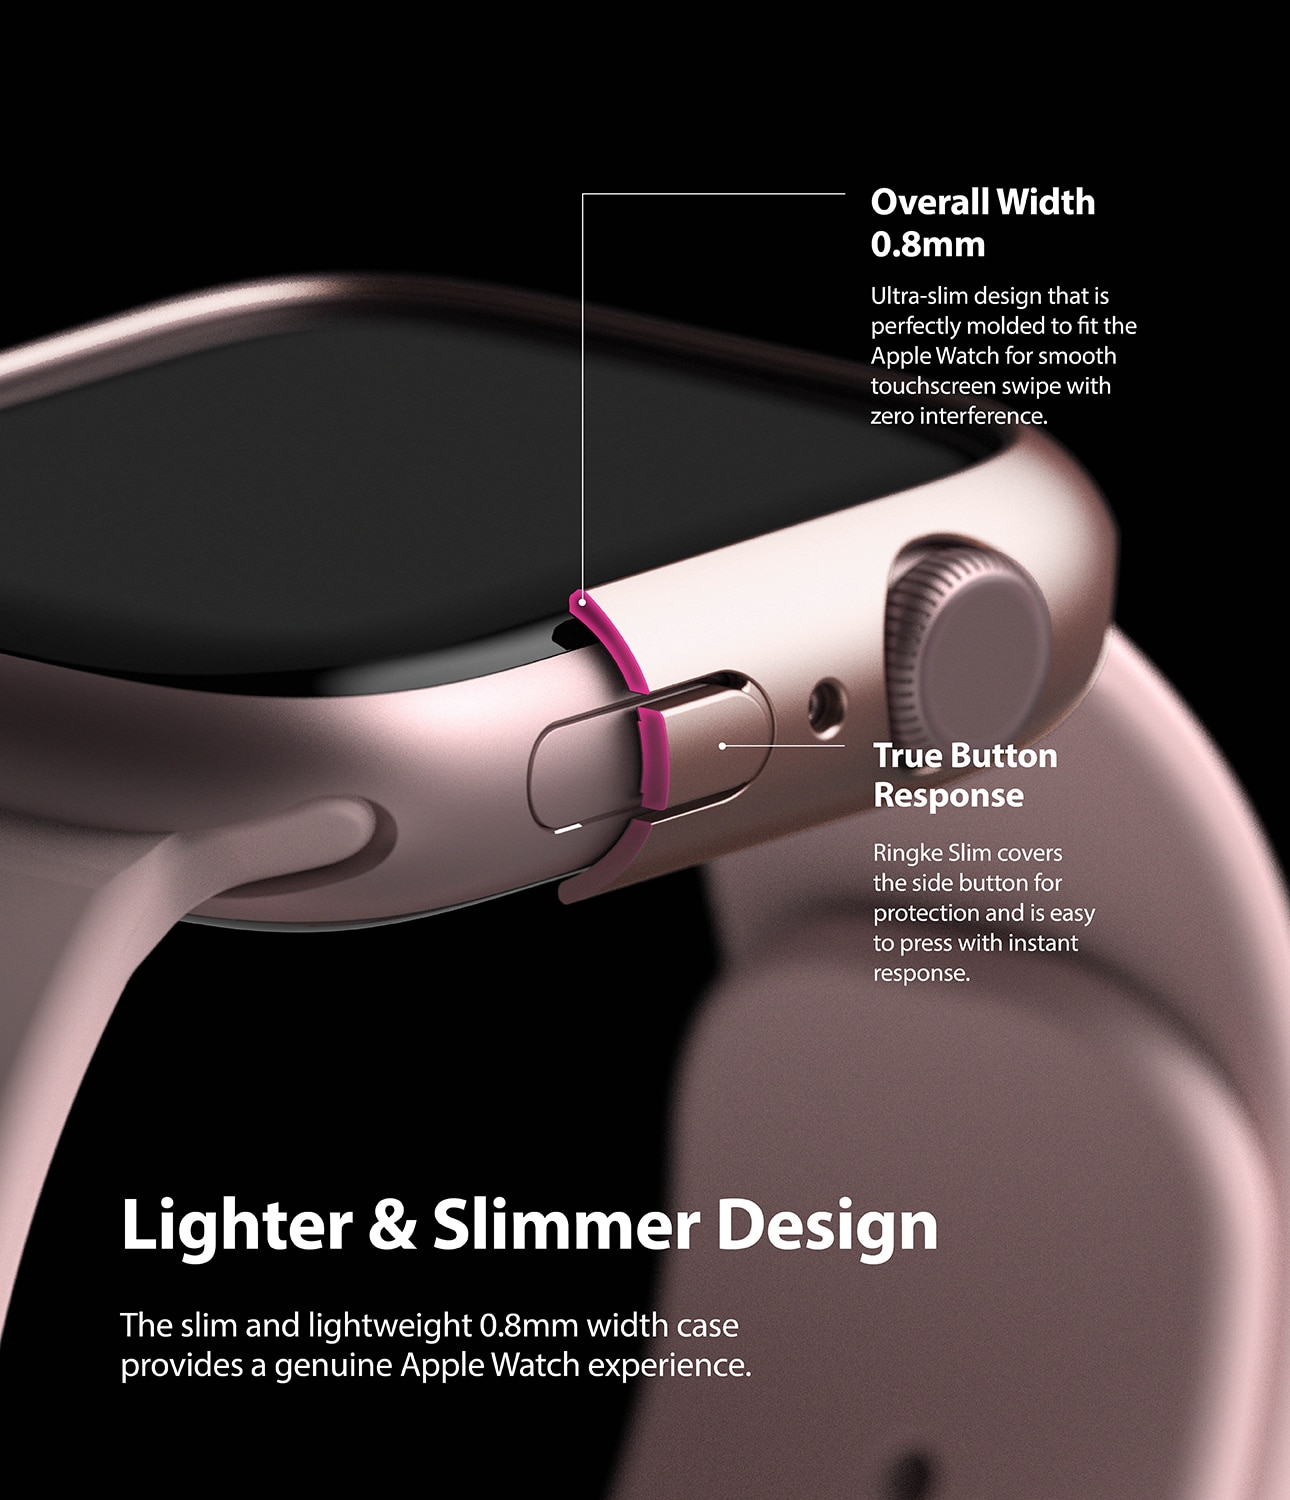 Coque Slim (2 pièces) Apple Watch 45mm Series 7, Pink & Clear